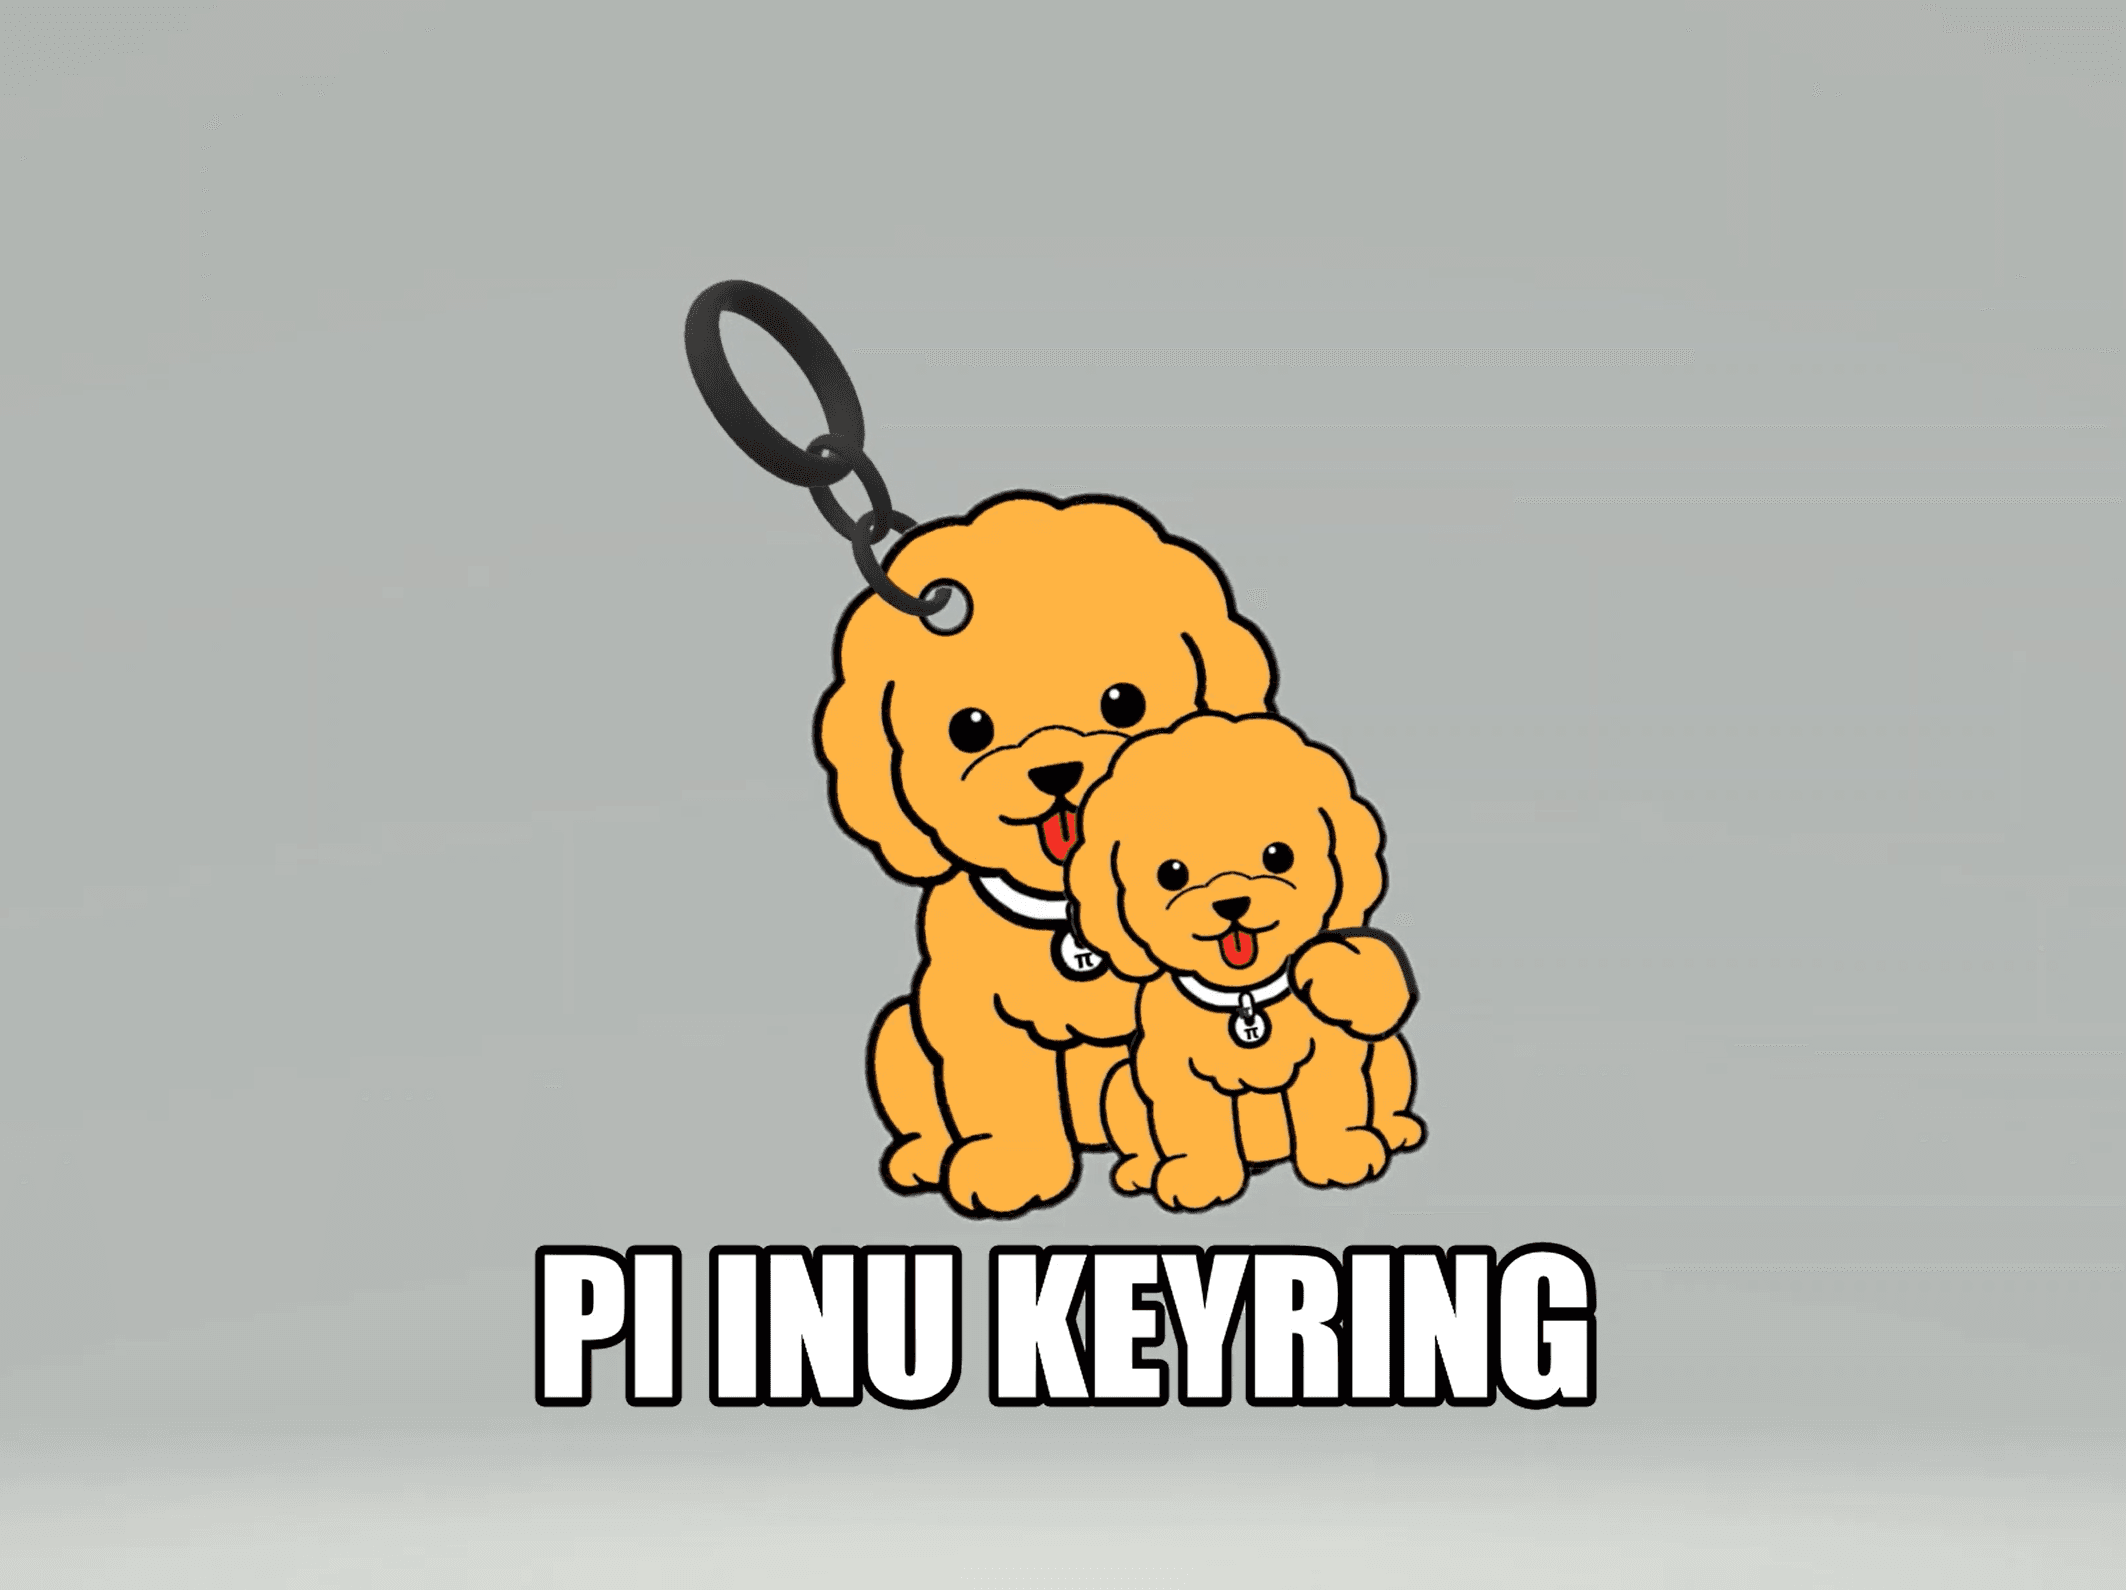 Pi INU Keyring